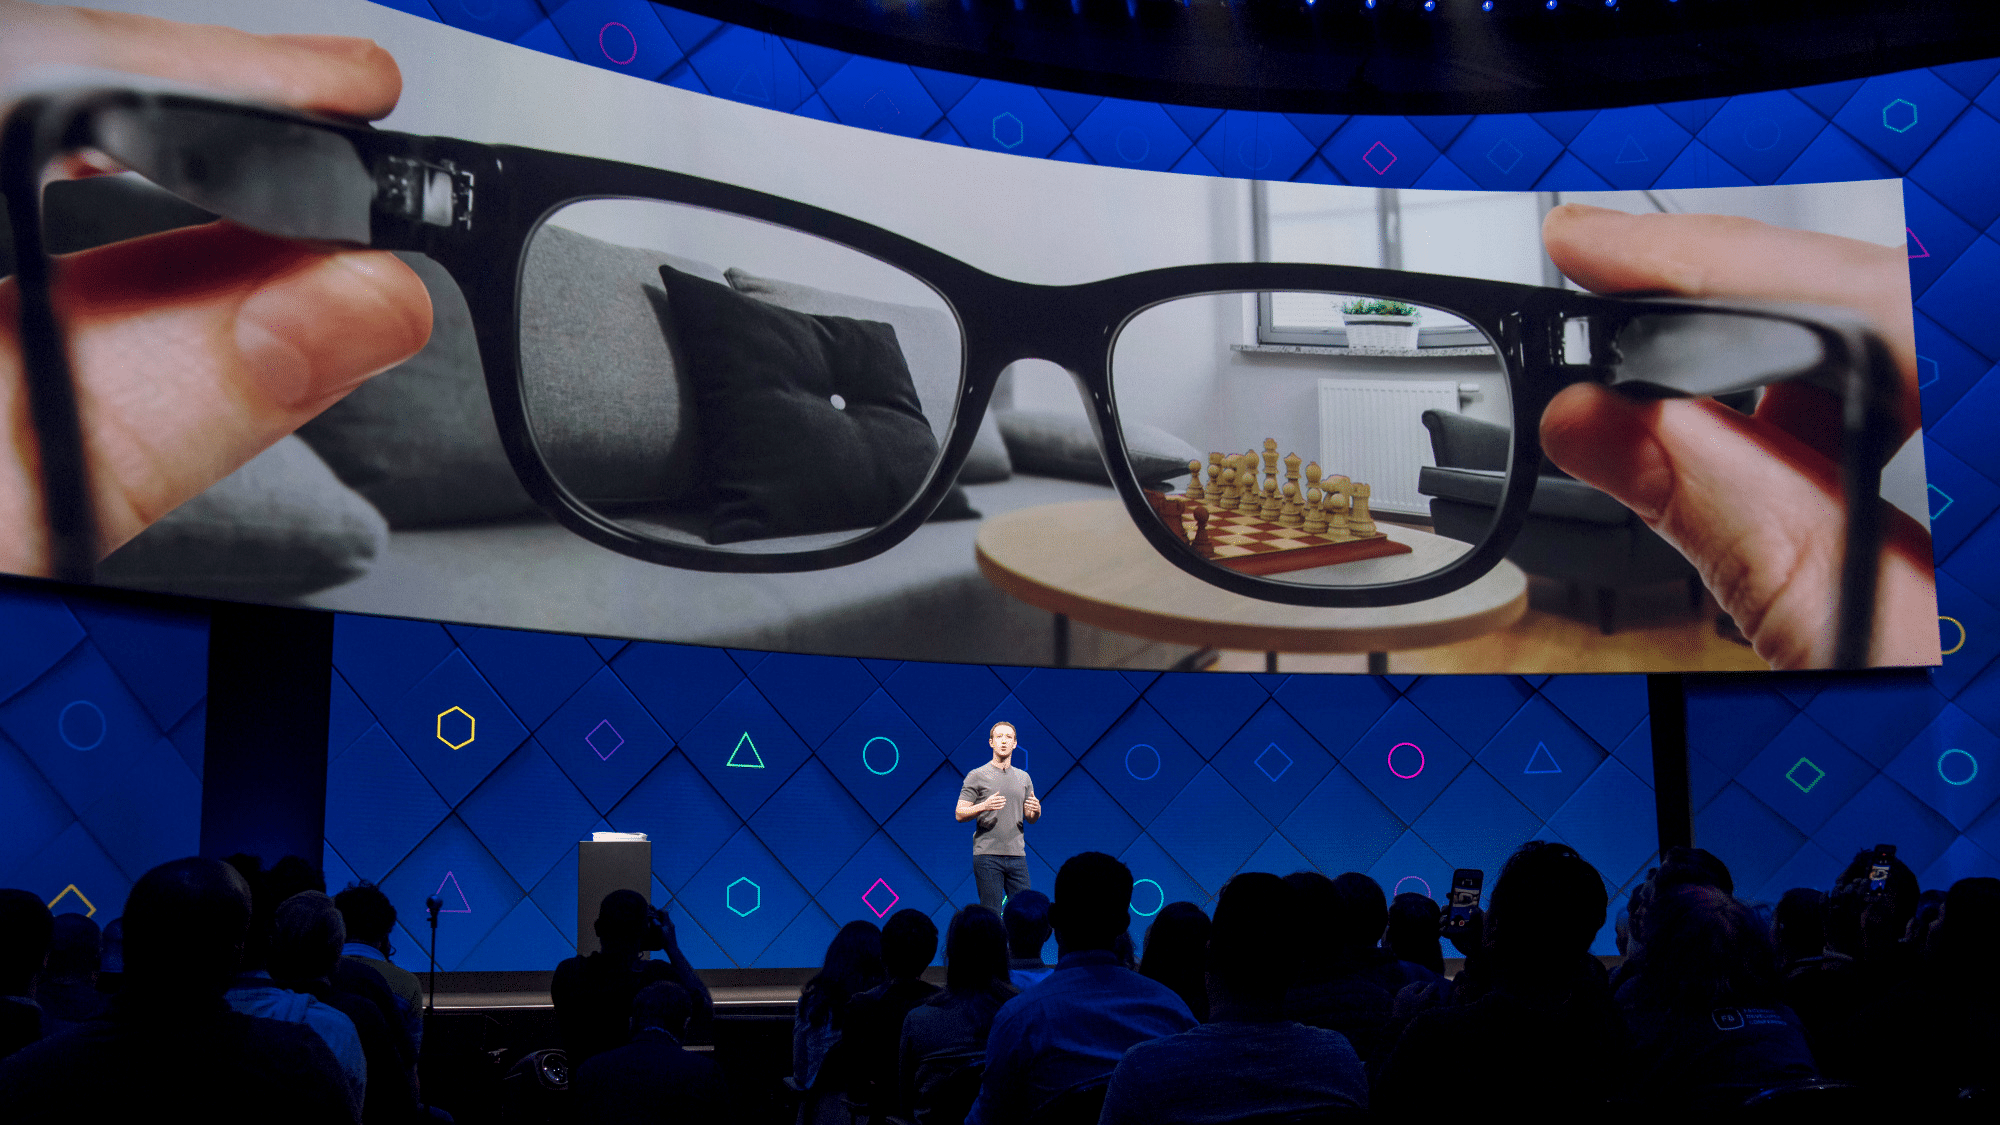 Development on Augmented Reality 'Apple Glasses' Postponed Indefinitely -  MacRumors